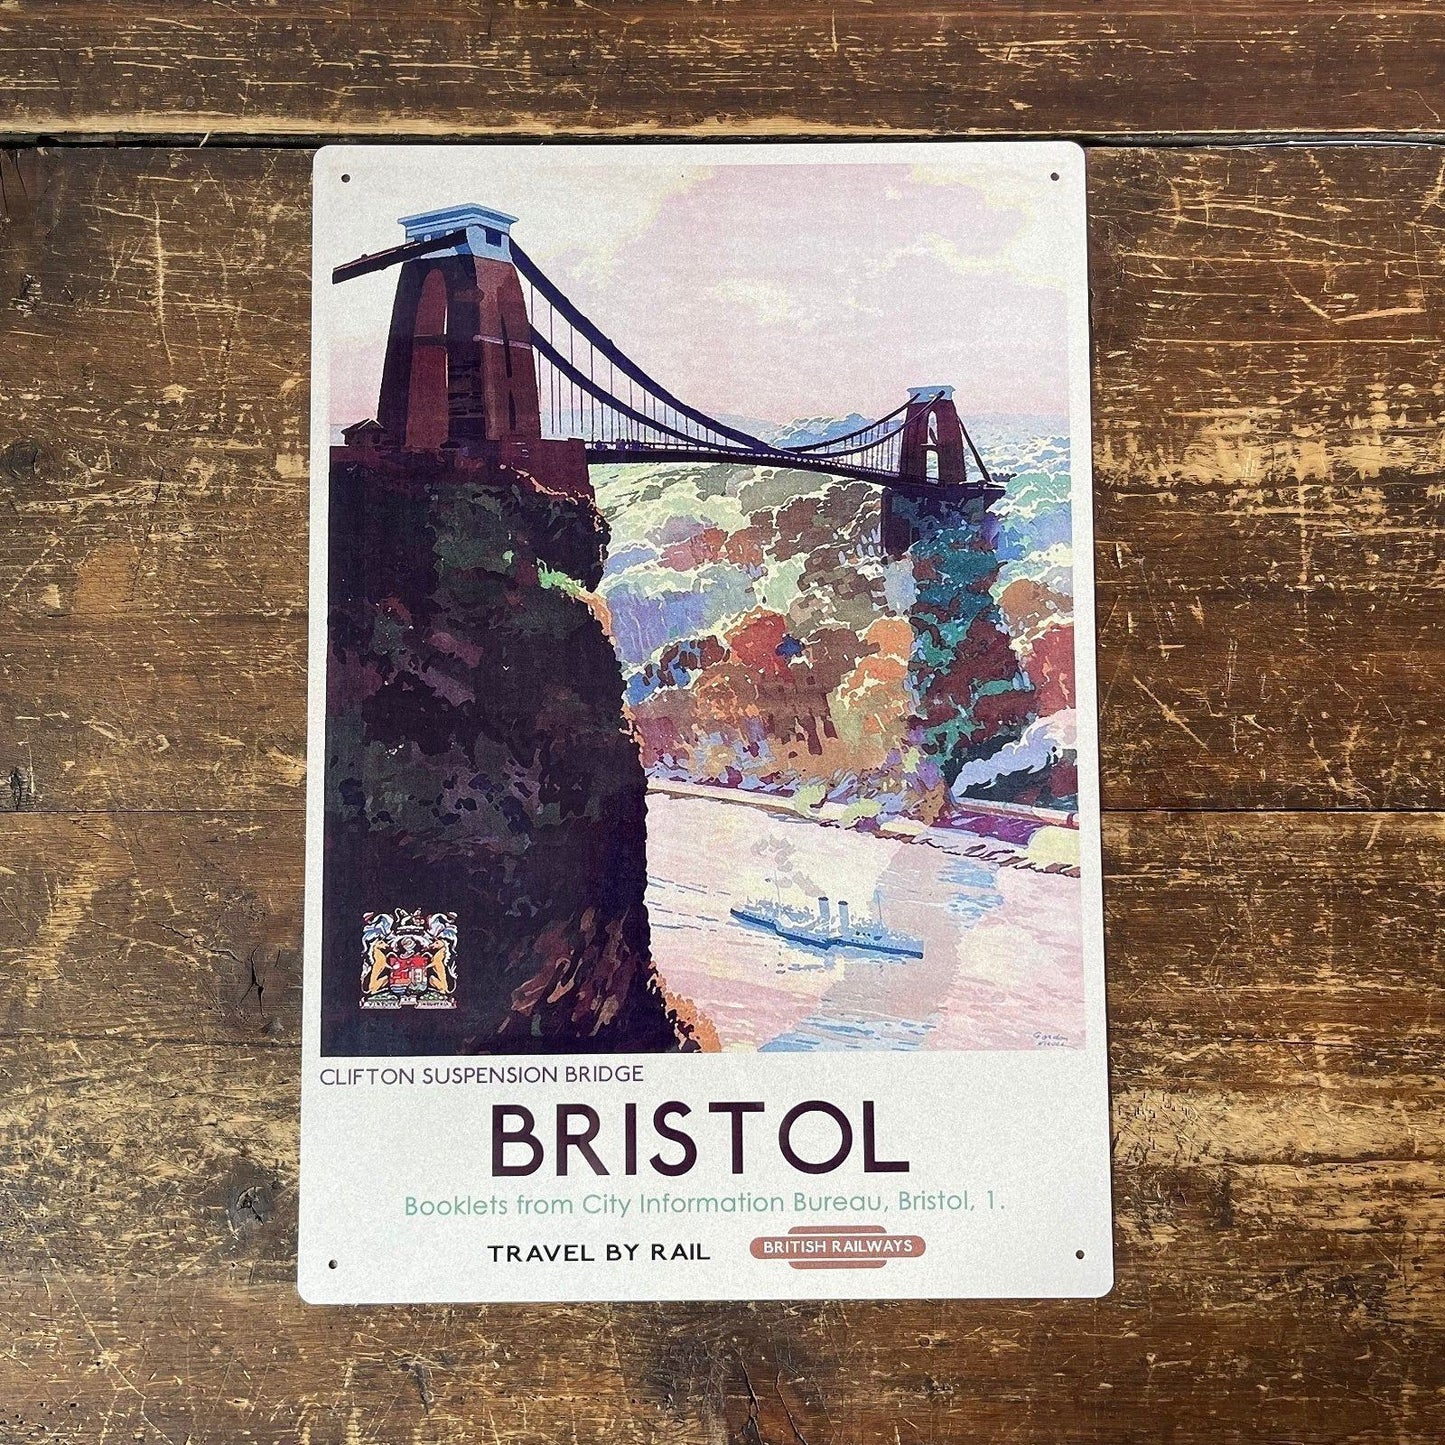 Vintage Metal Sign - British Railways Retro Advertising, Bristol Clifton Suspension Bridge - Ashton and Finch